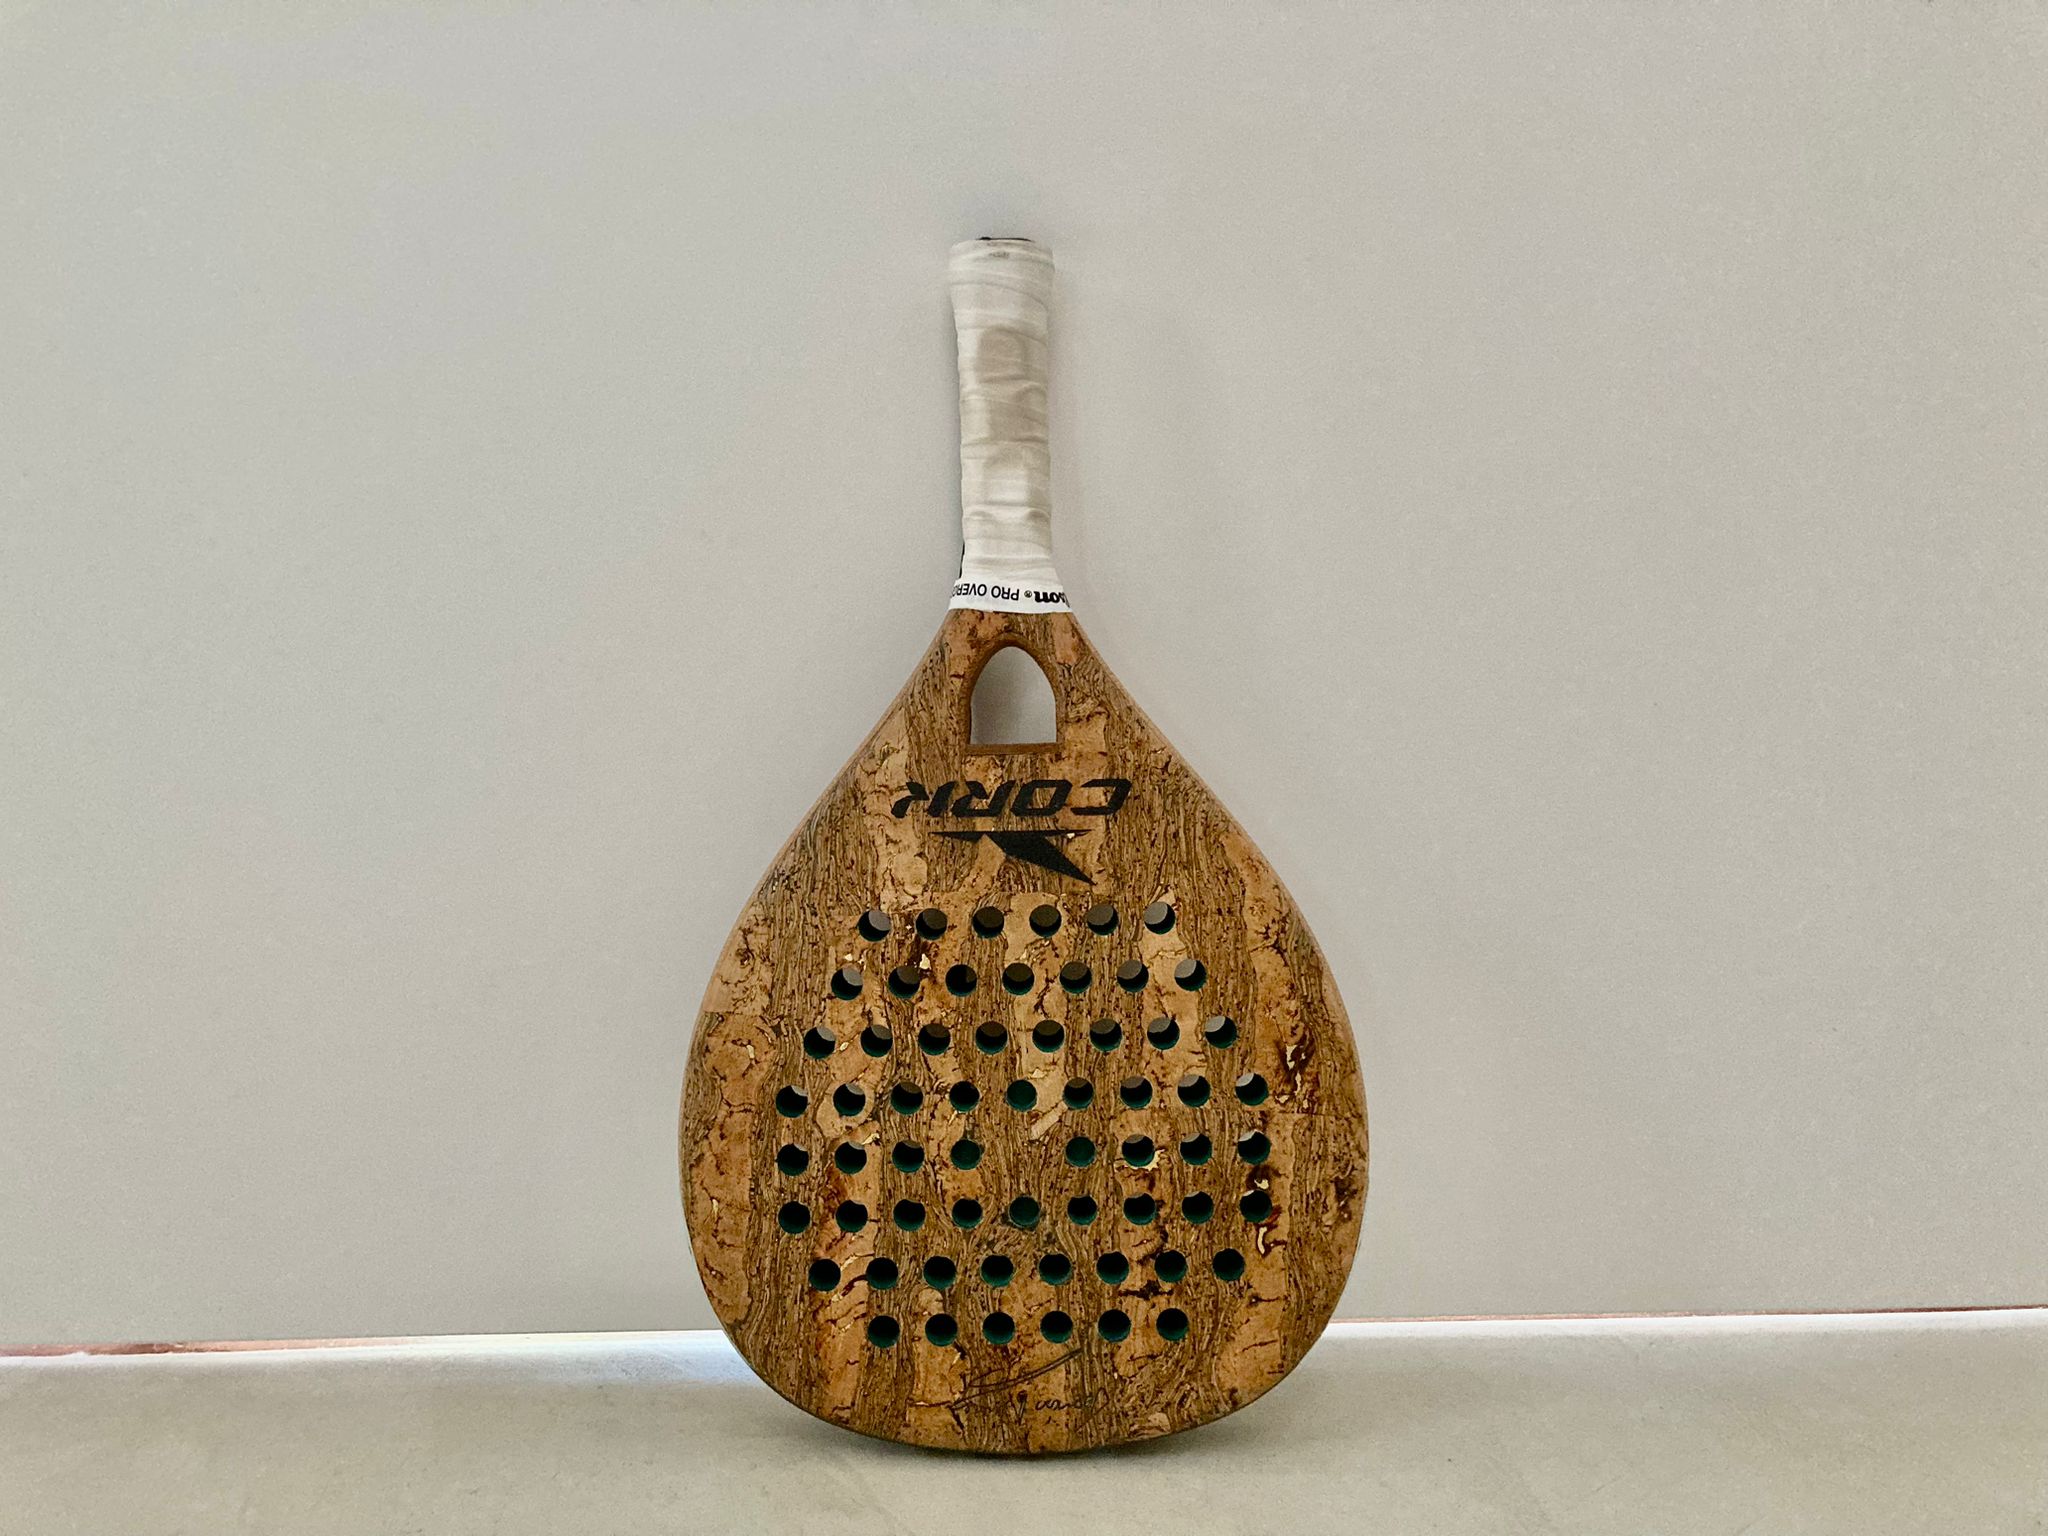 Uma raquete de padel da marca portuguesa "Cork", feita de cortiça.